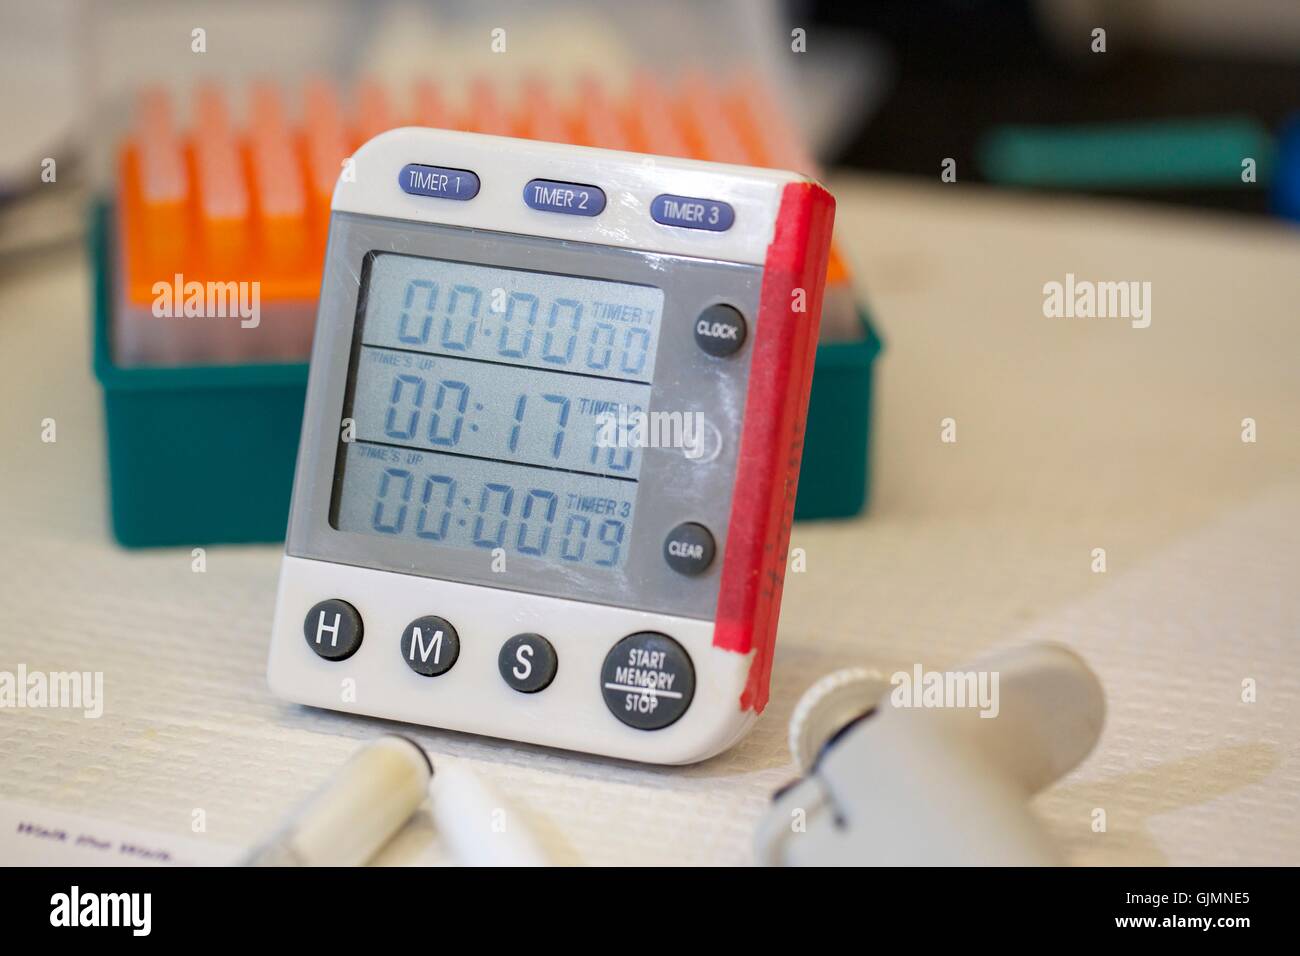 Digital timer on laboratory bench. Stock Photo